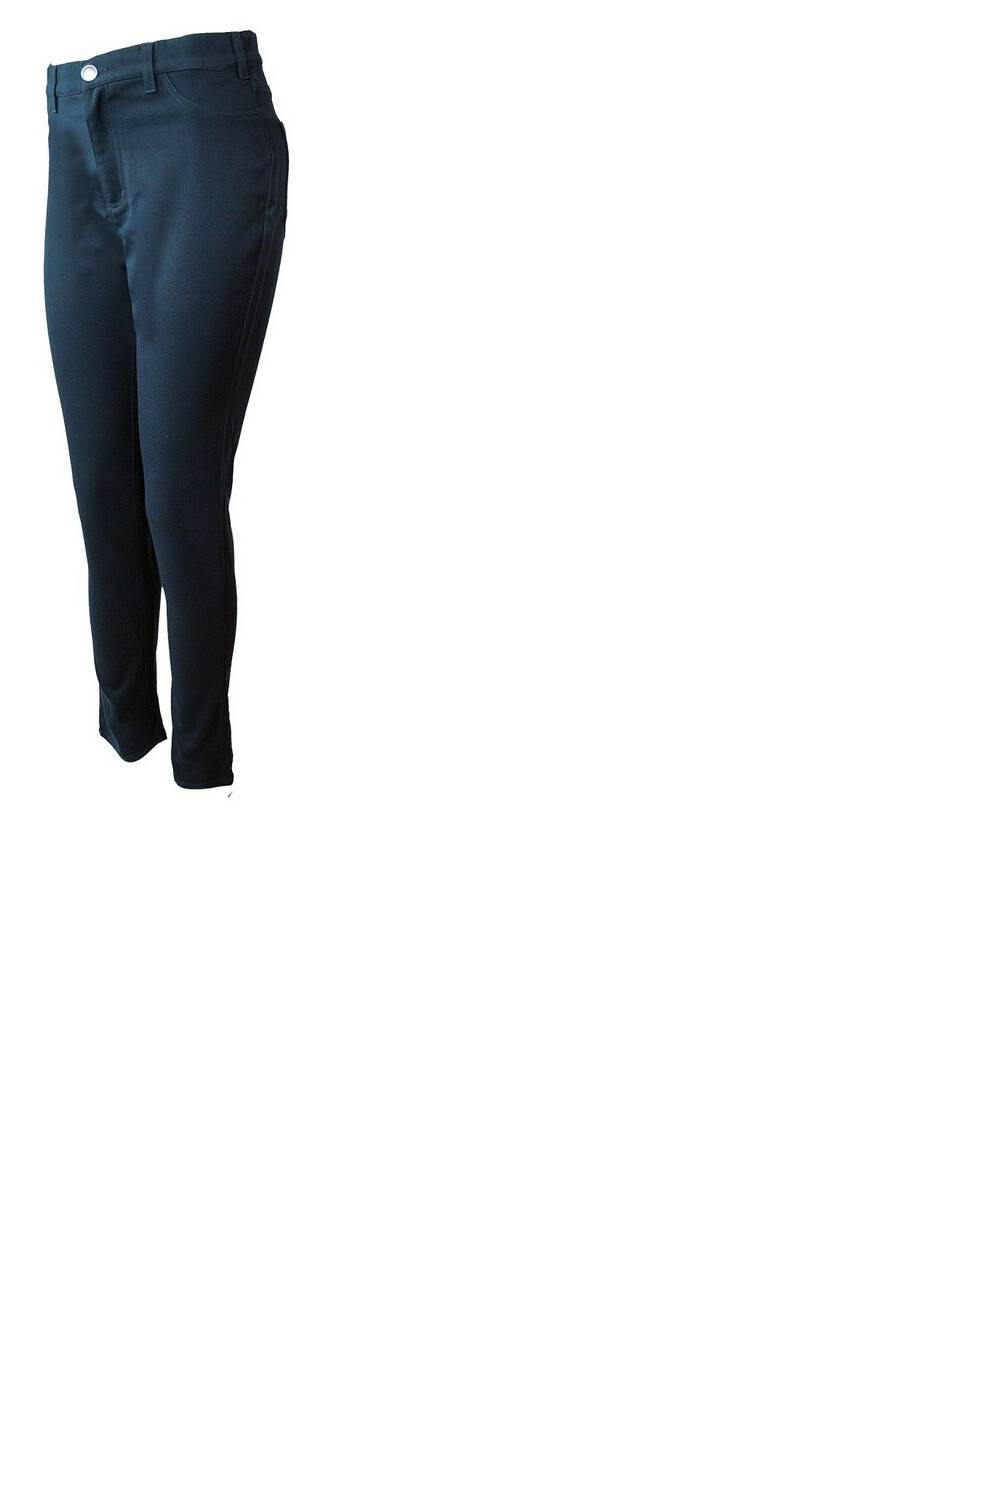 JAYSON - Pantalon Mujer Azul Leggins Pretina Alta